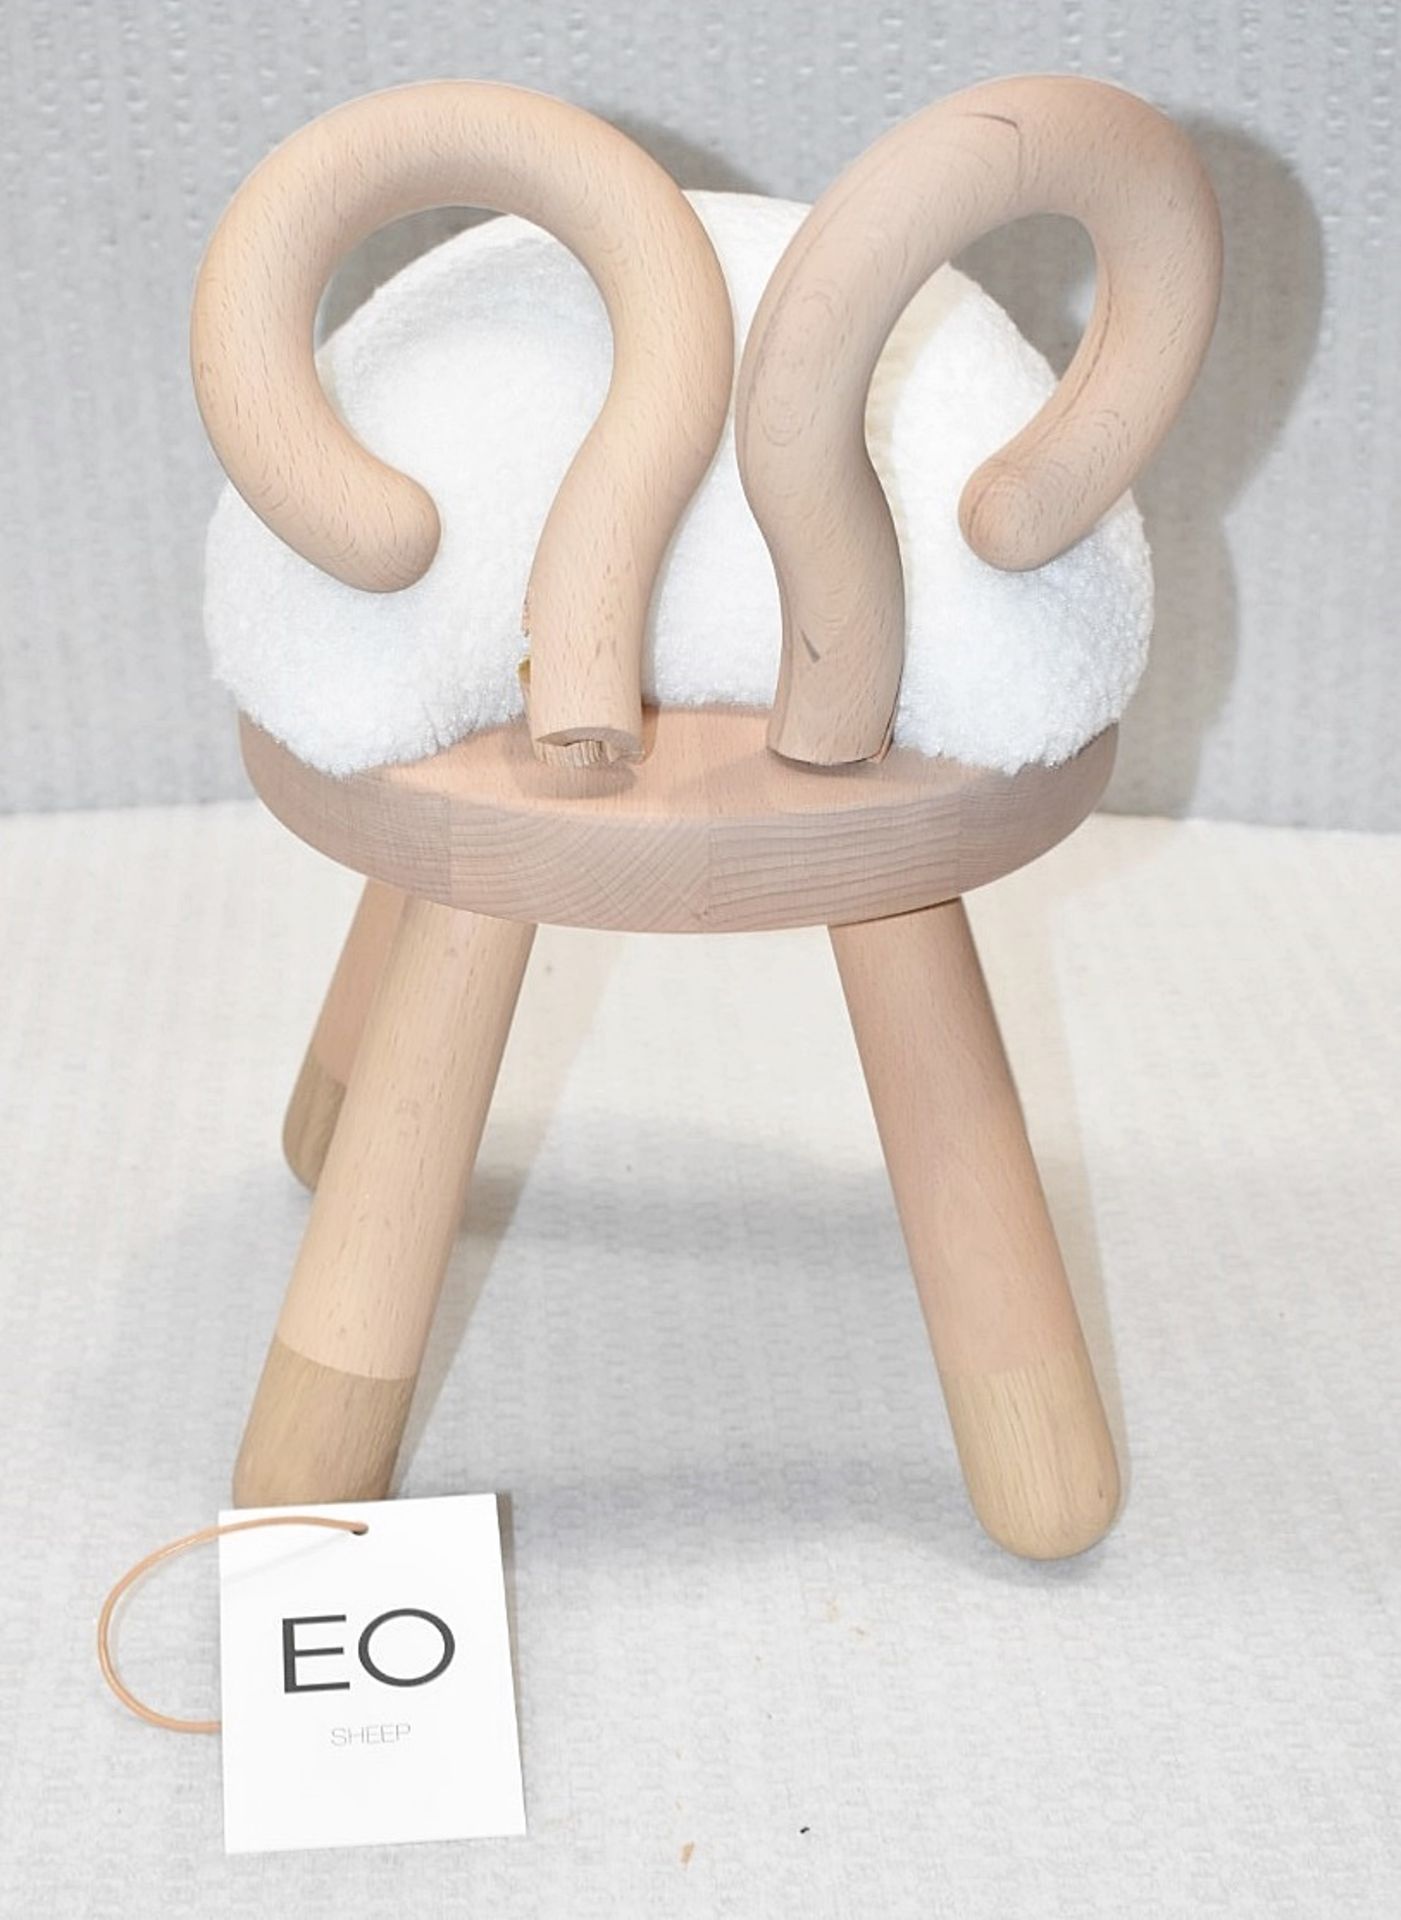 1 x EO 'Sheep' Designer Child's Chair - Original Price £275.00 - Unused Boxed Stock - Image 9 of 10